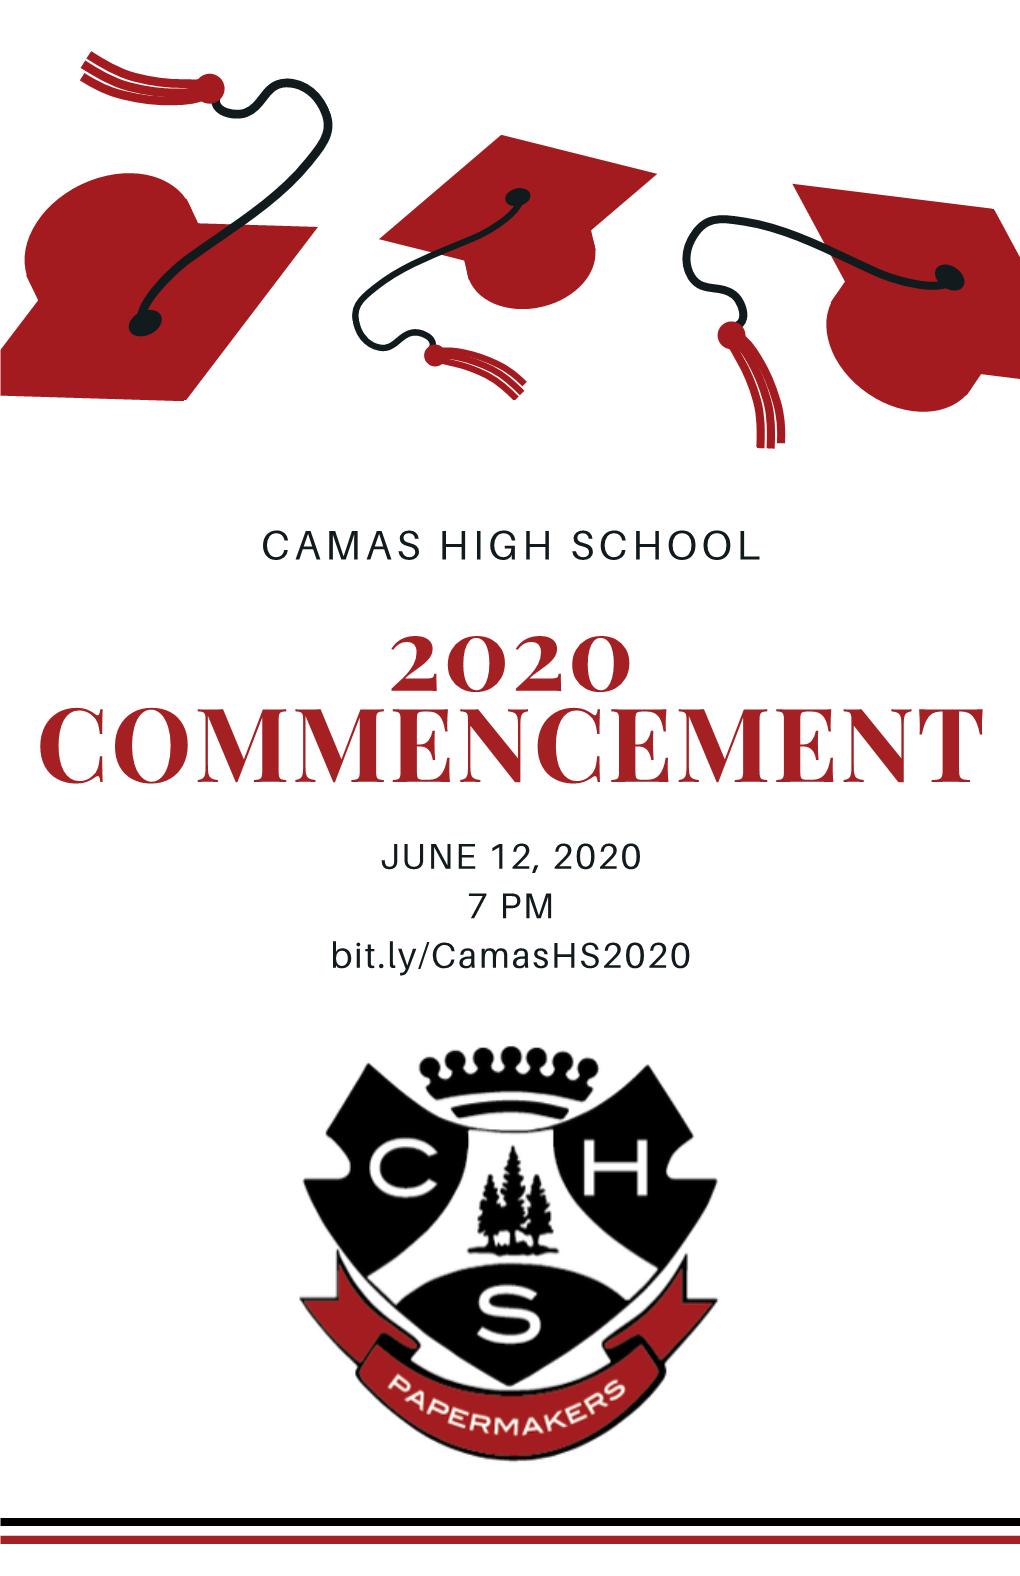 CAMAS HIGH SCHOOL 2020 COMMENCEMENT JUNE 12, 2020 7 PM Bit.Ly/Camashs2020 2020 COMMENCEMENT Virtual Ceremony Program 7:00 P.M